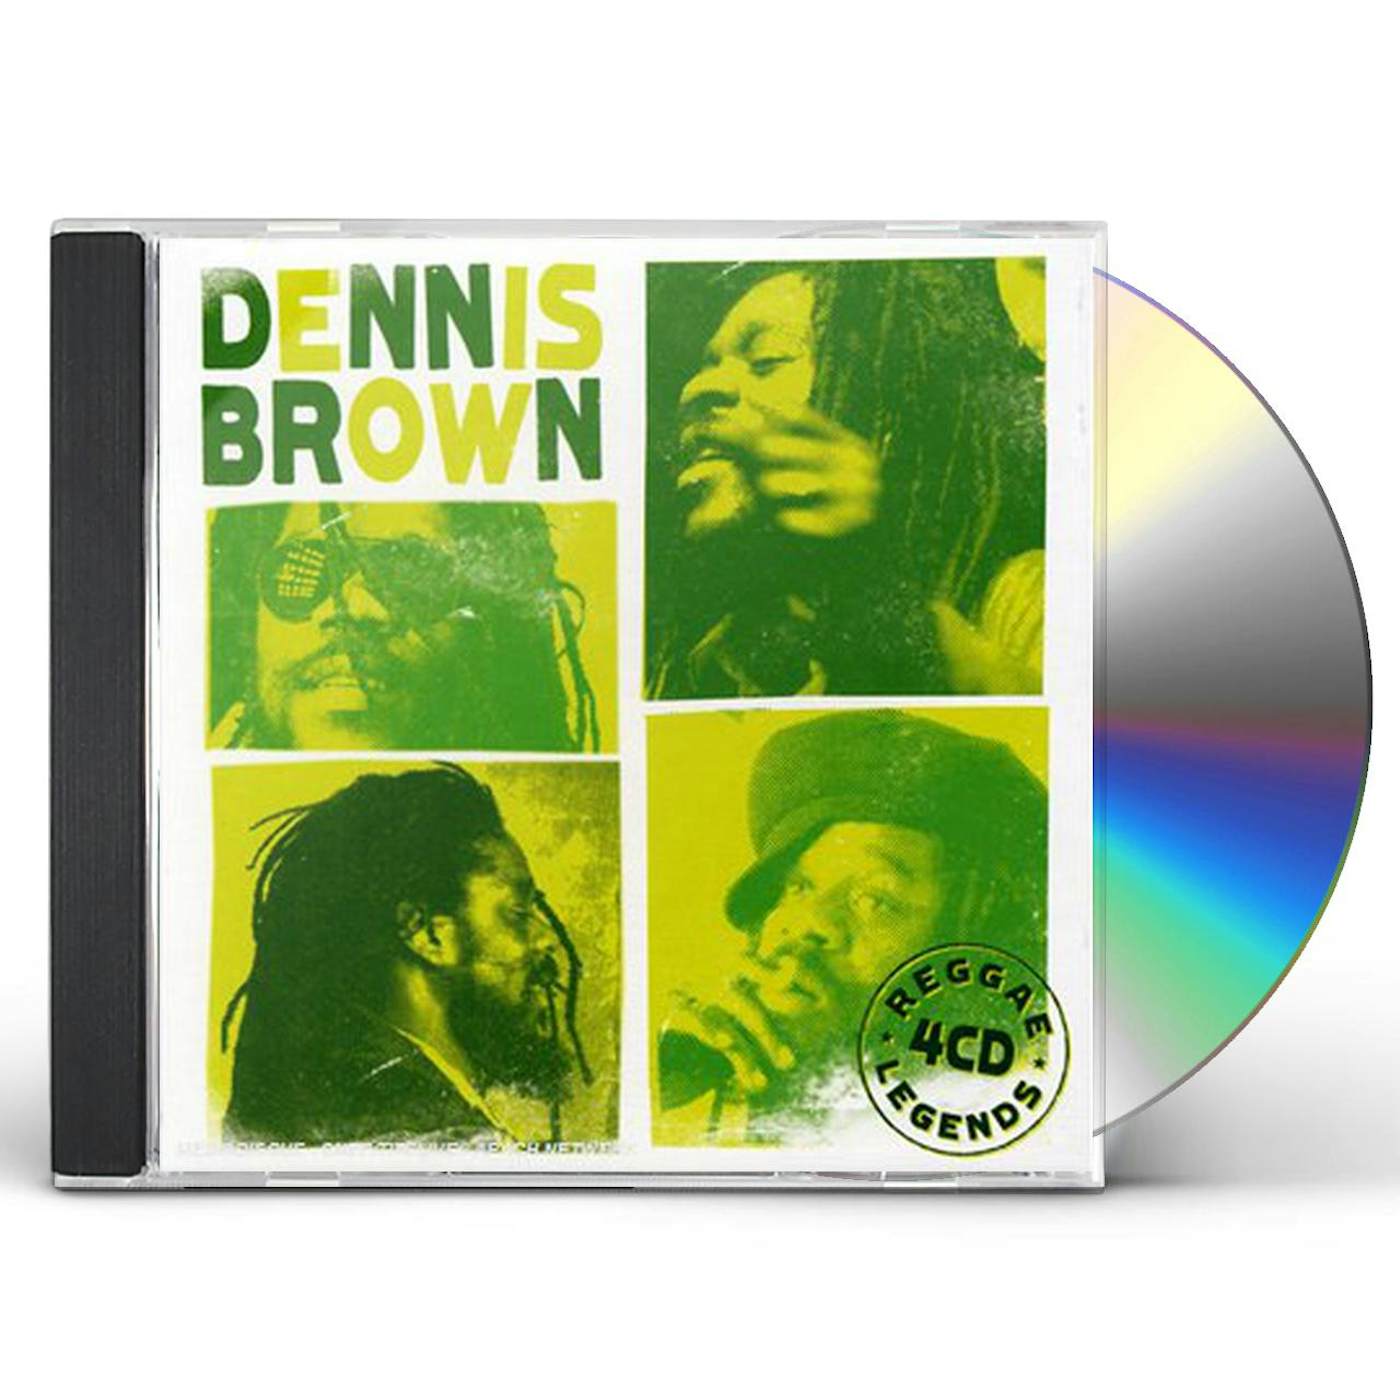 Dennis Brown REGGAE LEGENDS CD